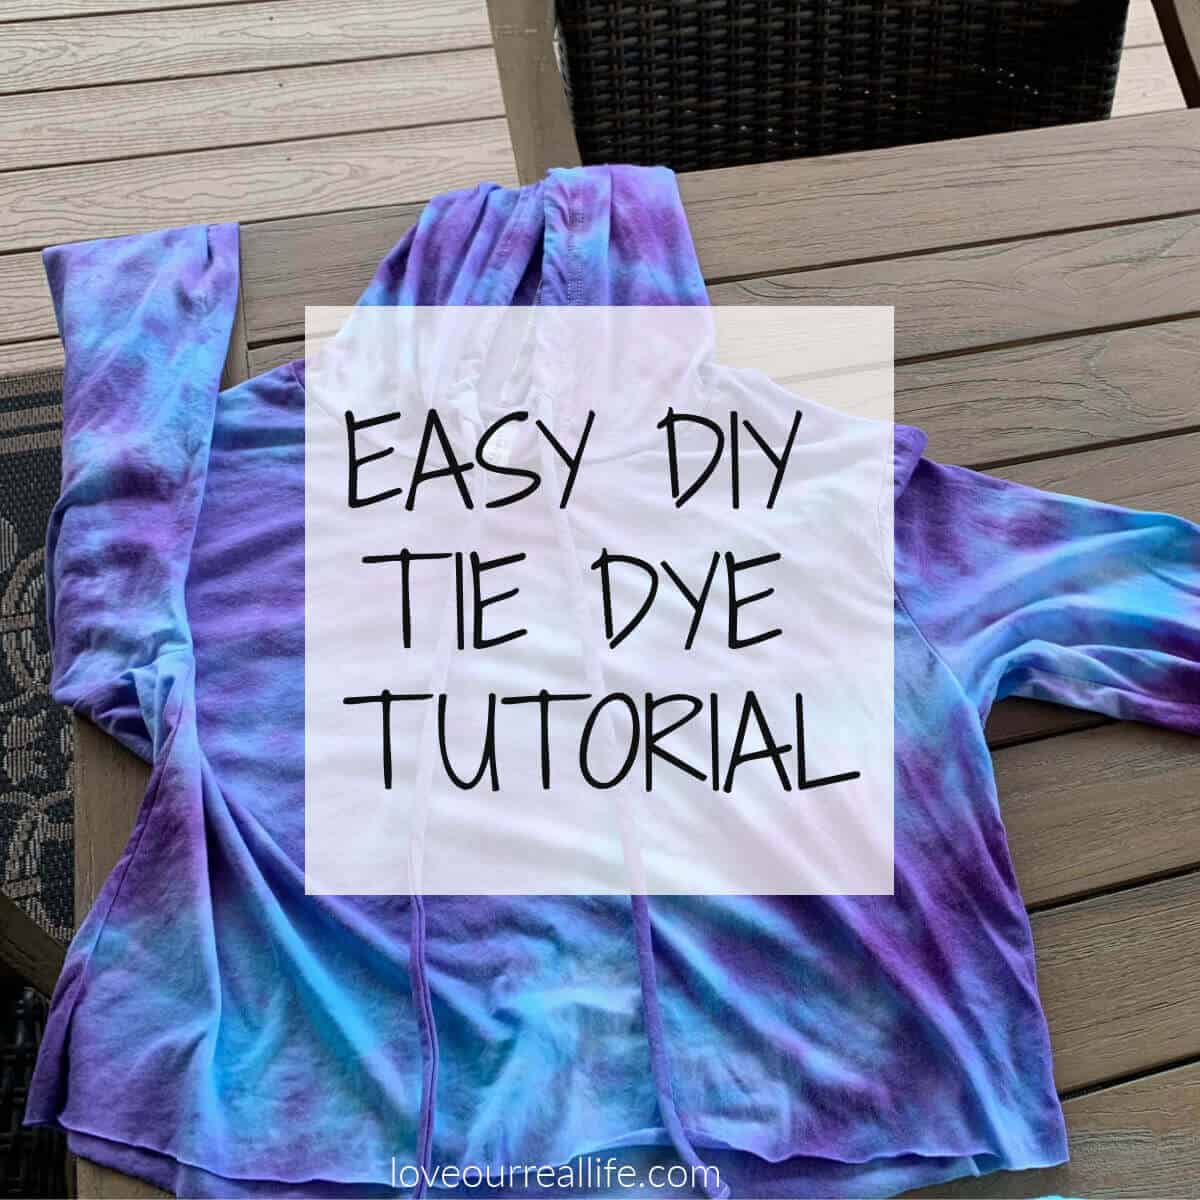 Vertrek naar Lucht Leerling Easy DIY Tie Dye Tutorial - Instructions with Pictures ⋆ Love Our Real Life